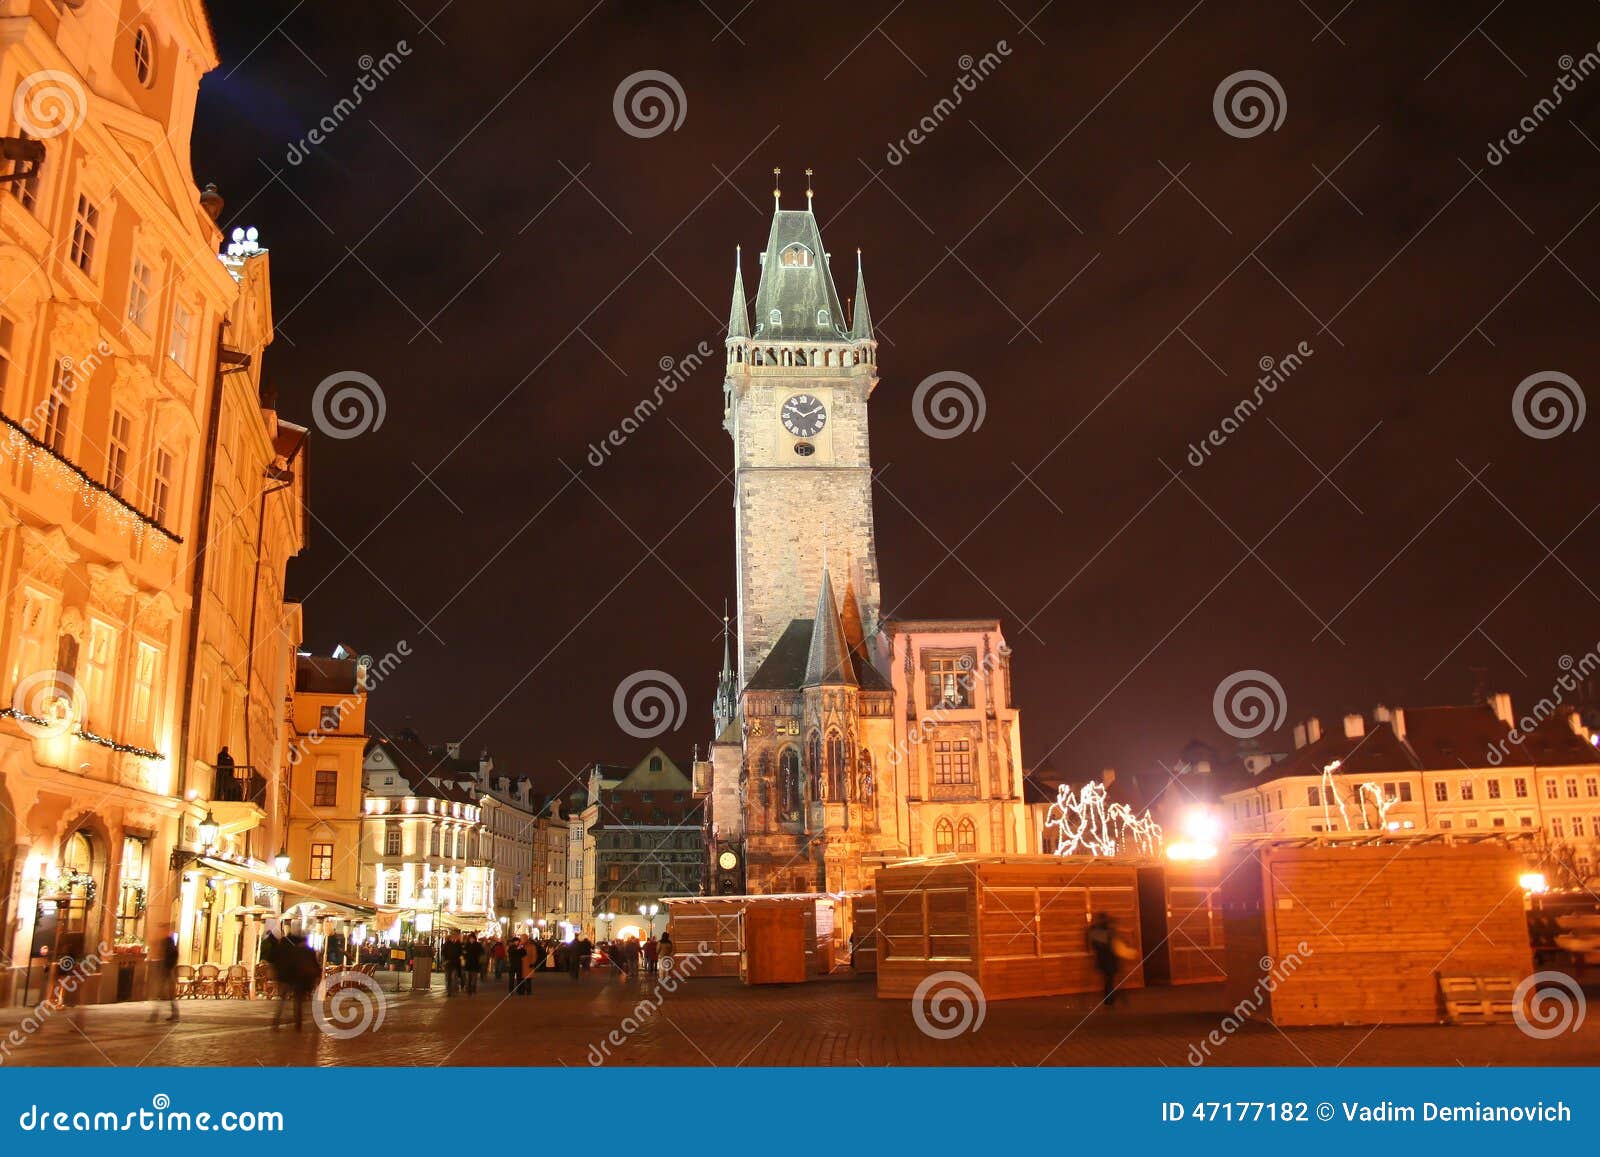 staromestske square in the city of prague for christmas